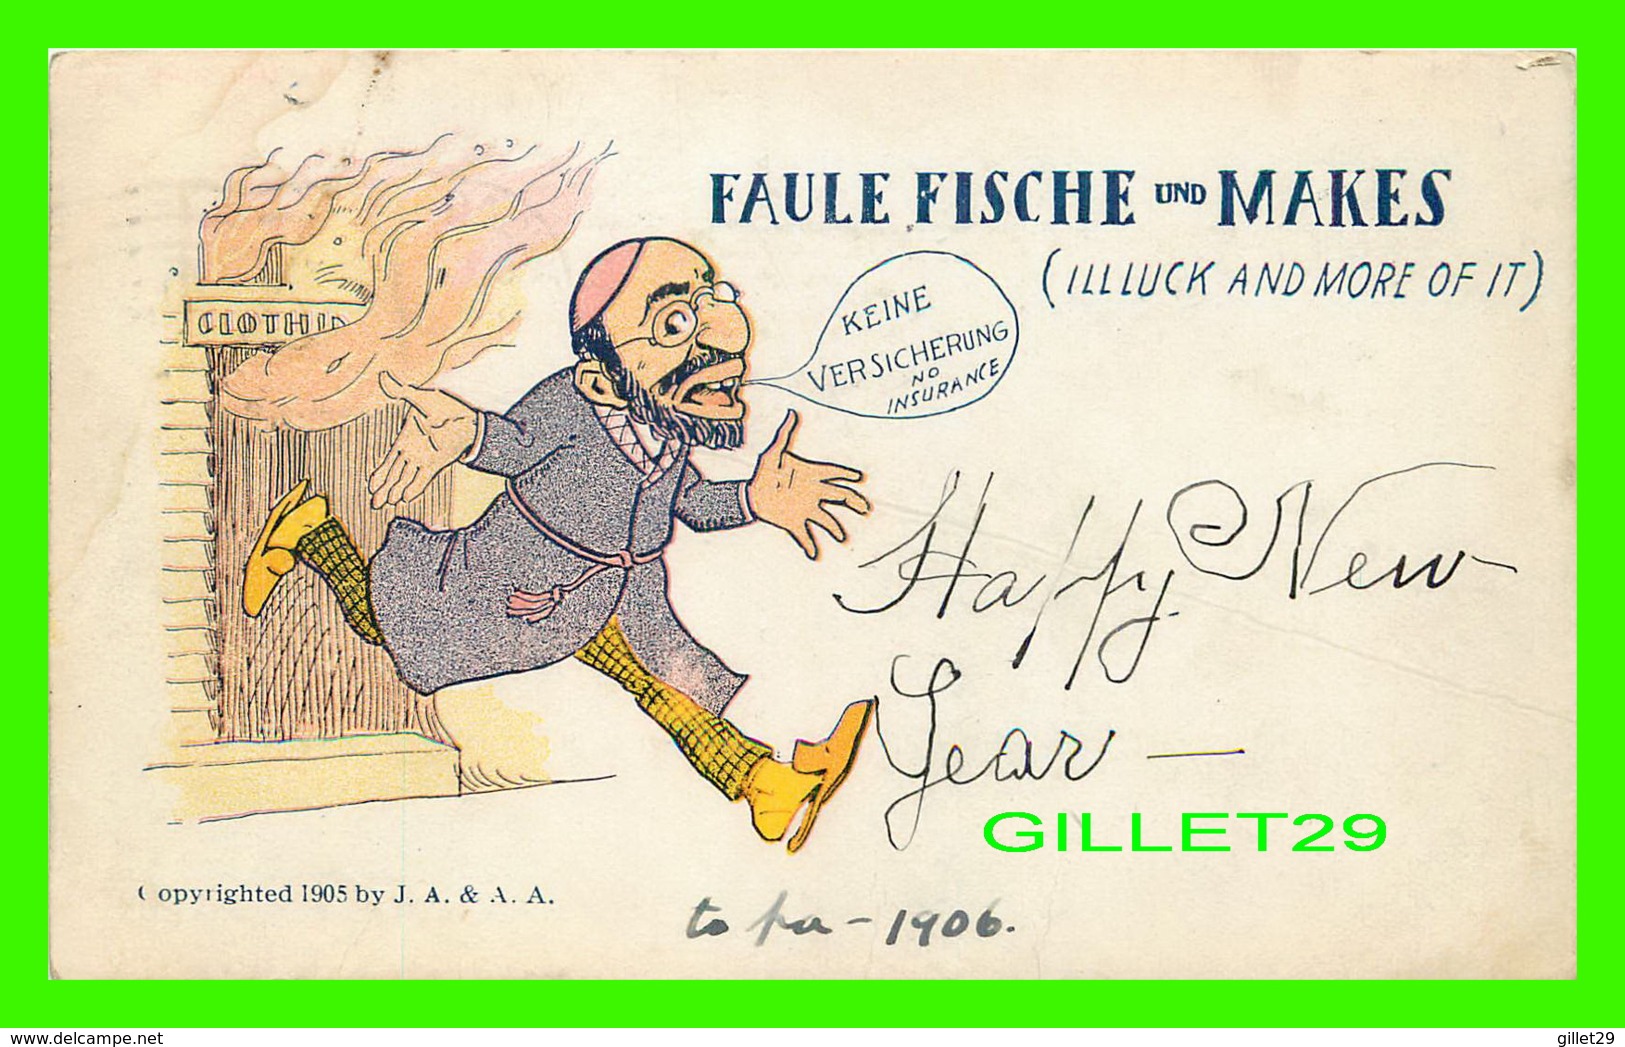 HUMOUR, COMICS - FAULE FISCHE UND MAKES - 1905 BY J.A. & A.A. - TRAVEL - - Humour